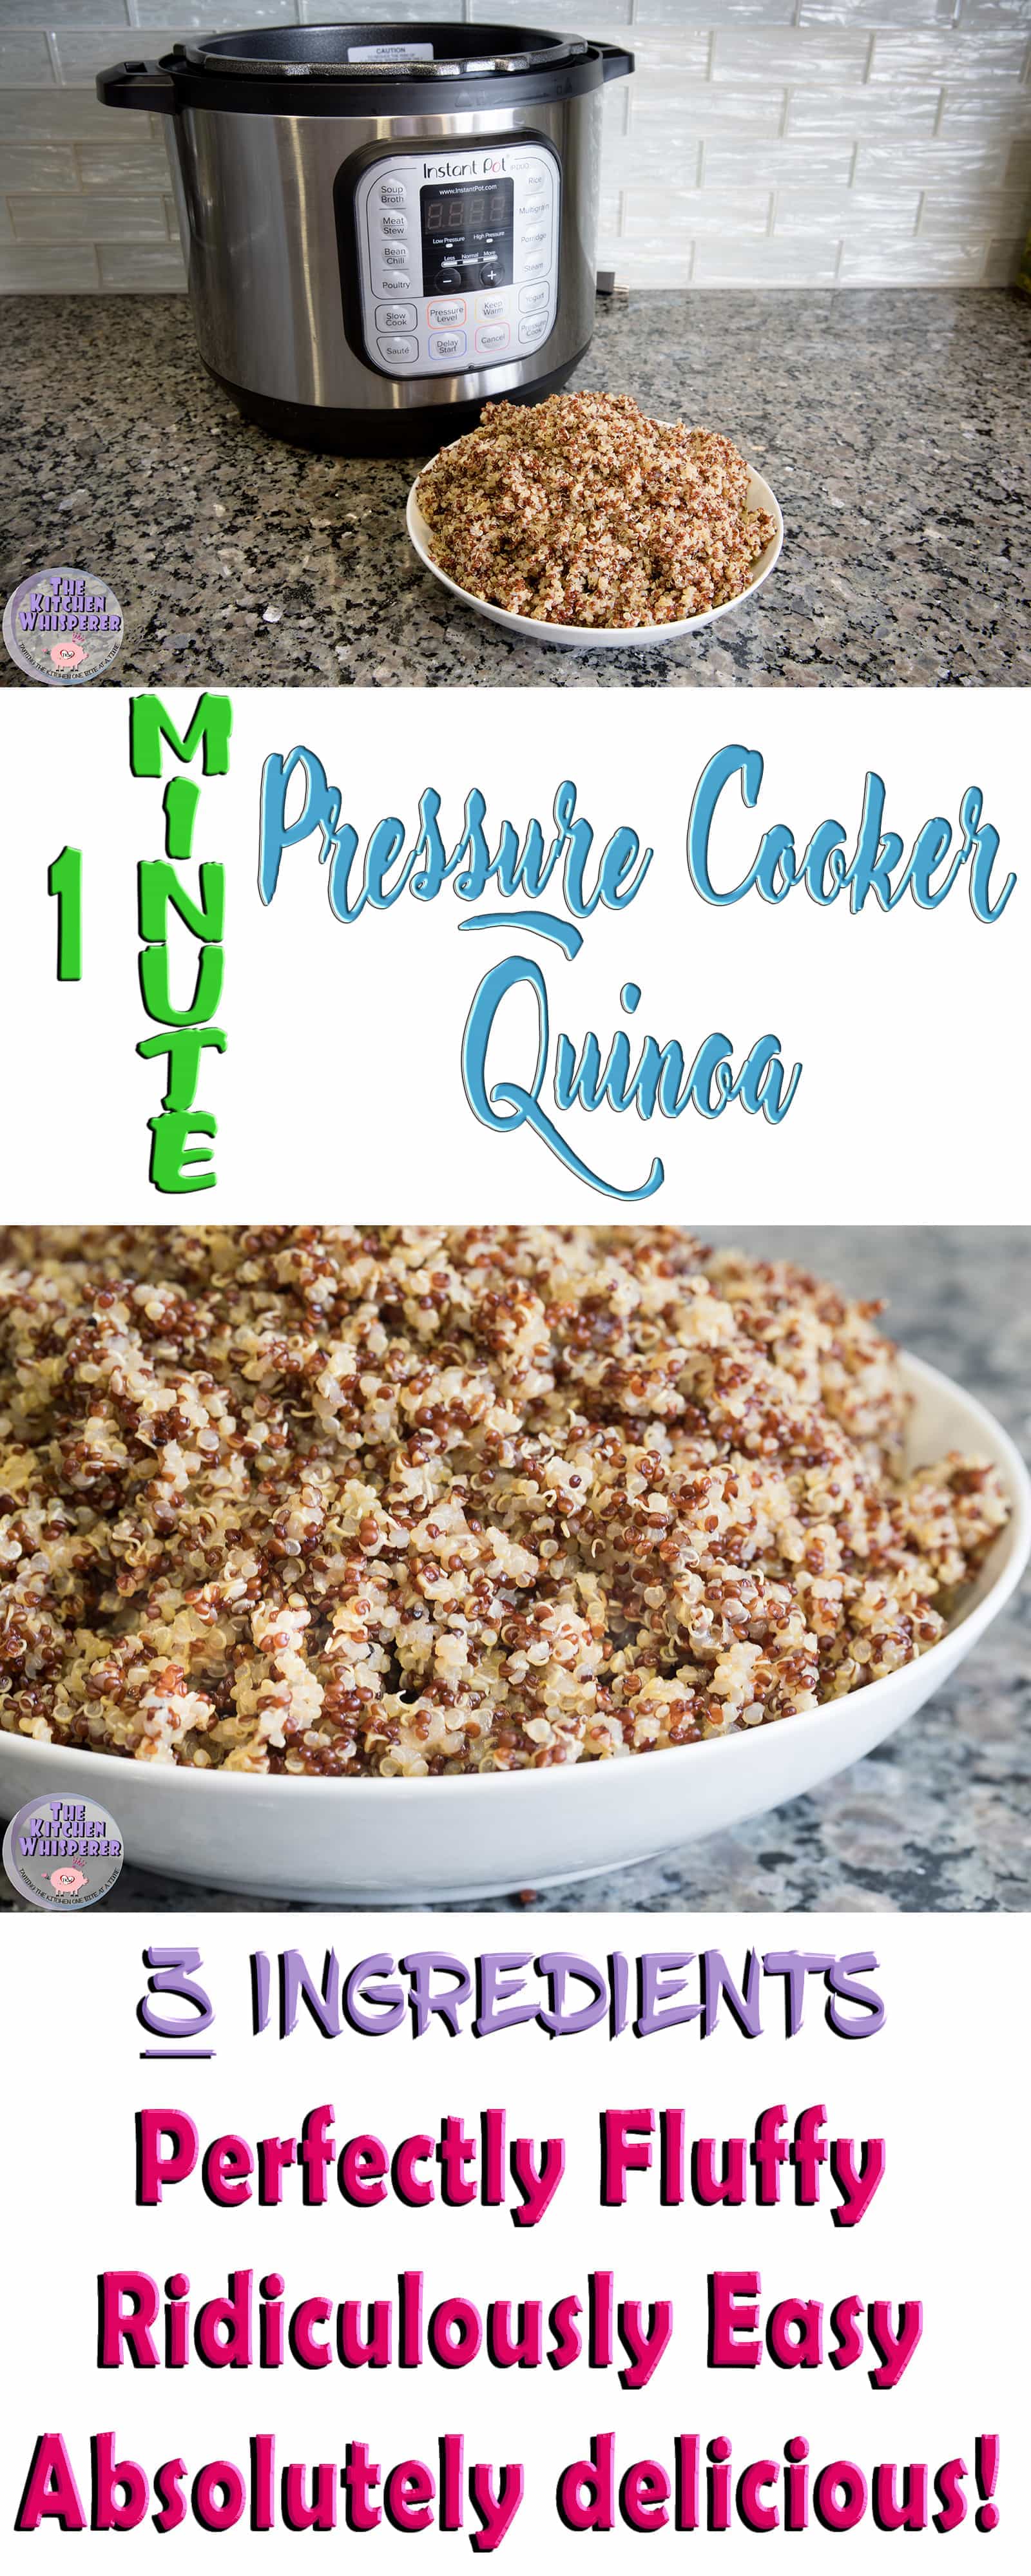 https://www.thekitchenwhisperer.net/wp-content/uploads/2018/01/One-Minute-Pressure-Cooker-Quinoa-Collage1-1.jpg